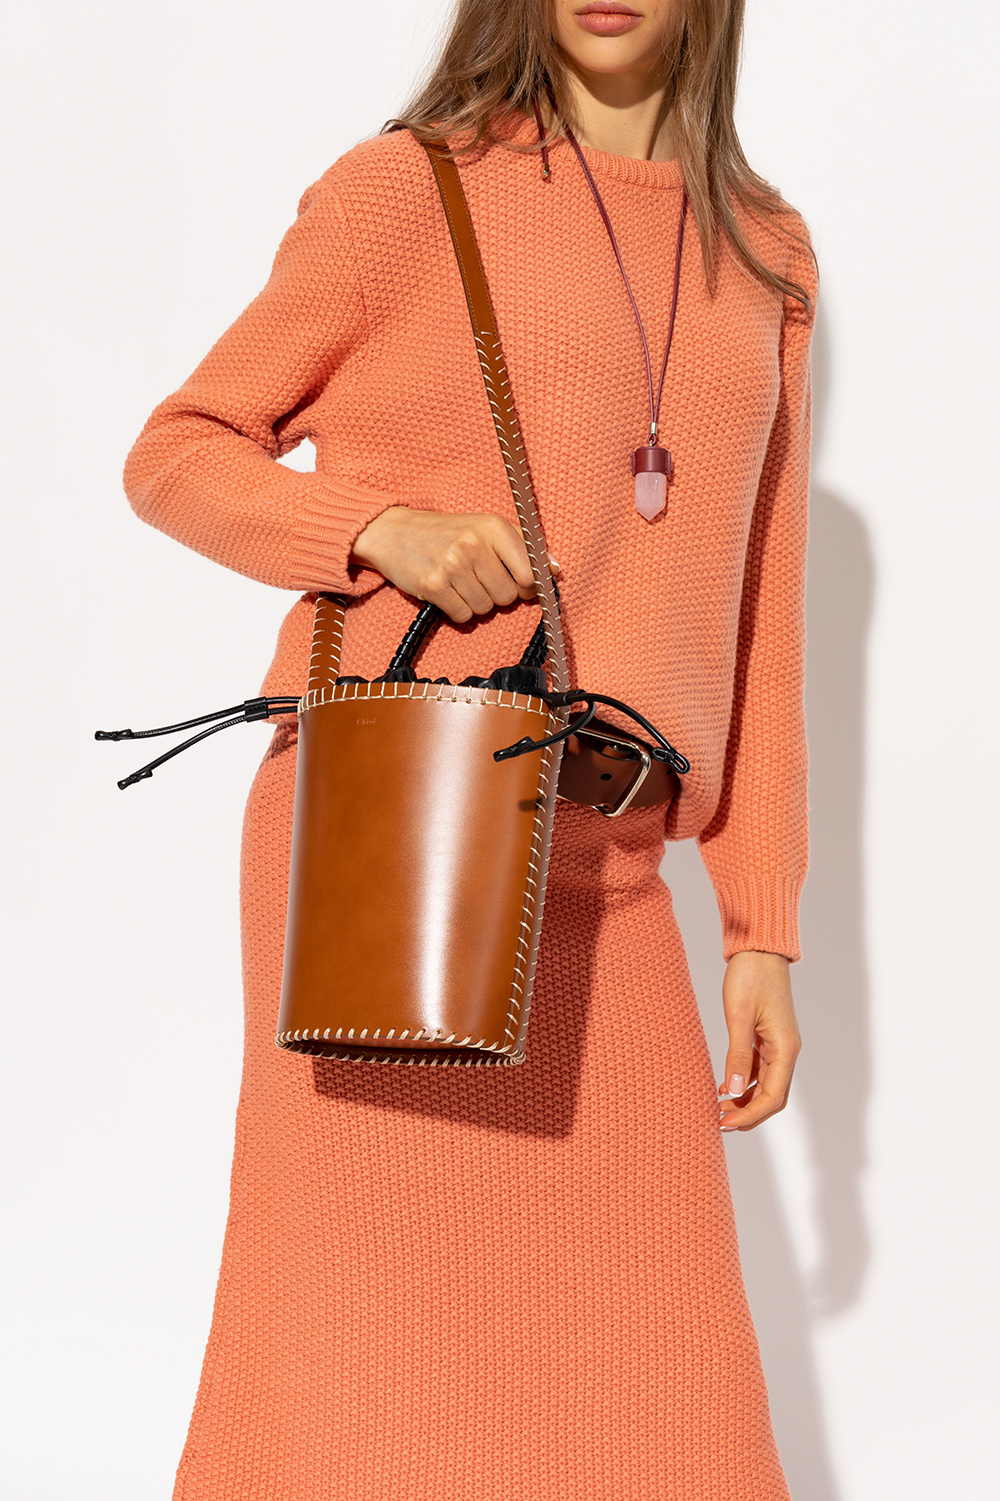 Chloé 'Louela Small' bucket bag, Women's Bags